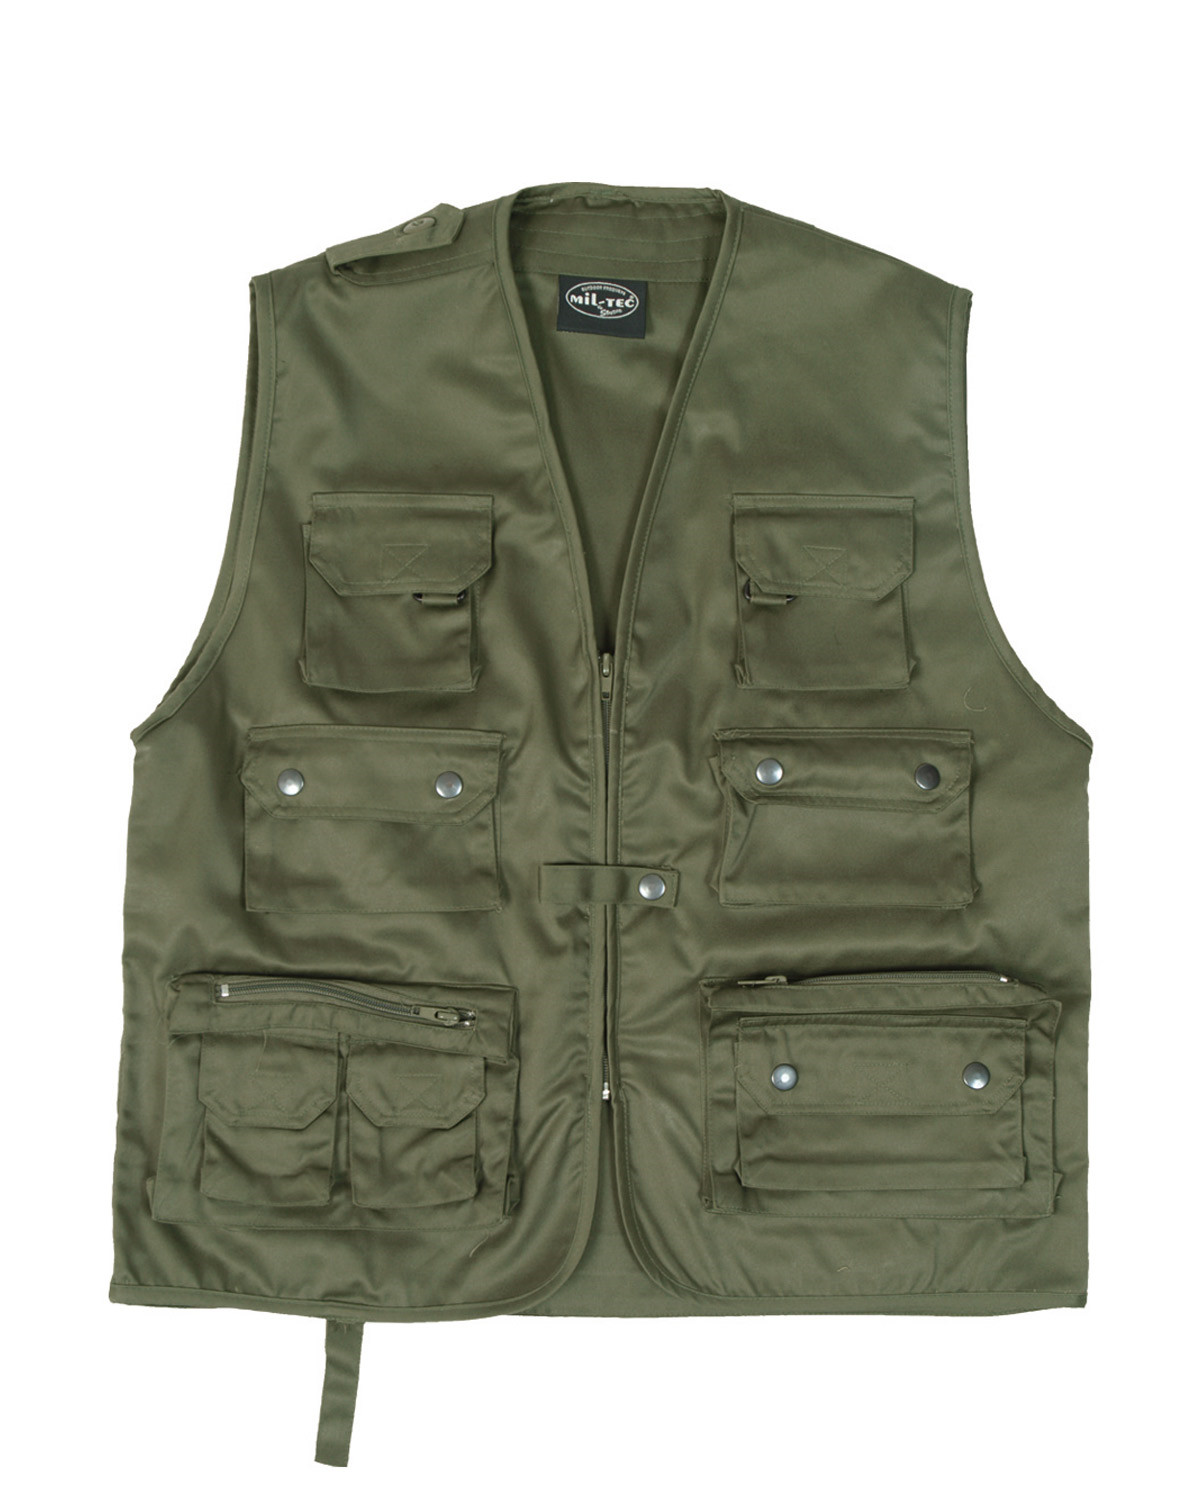 Mil-Tec Hunters Vest (Oliven, M)